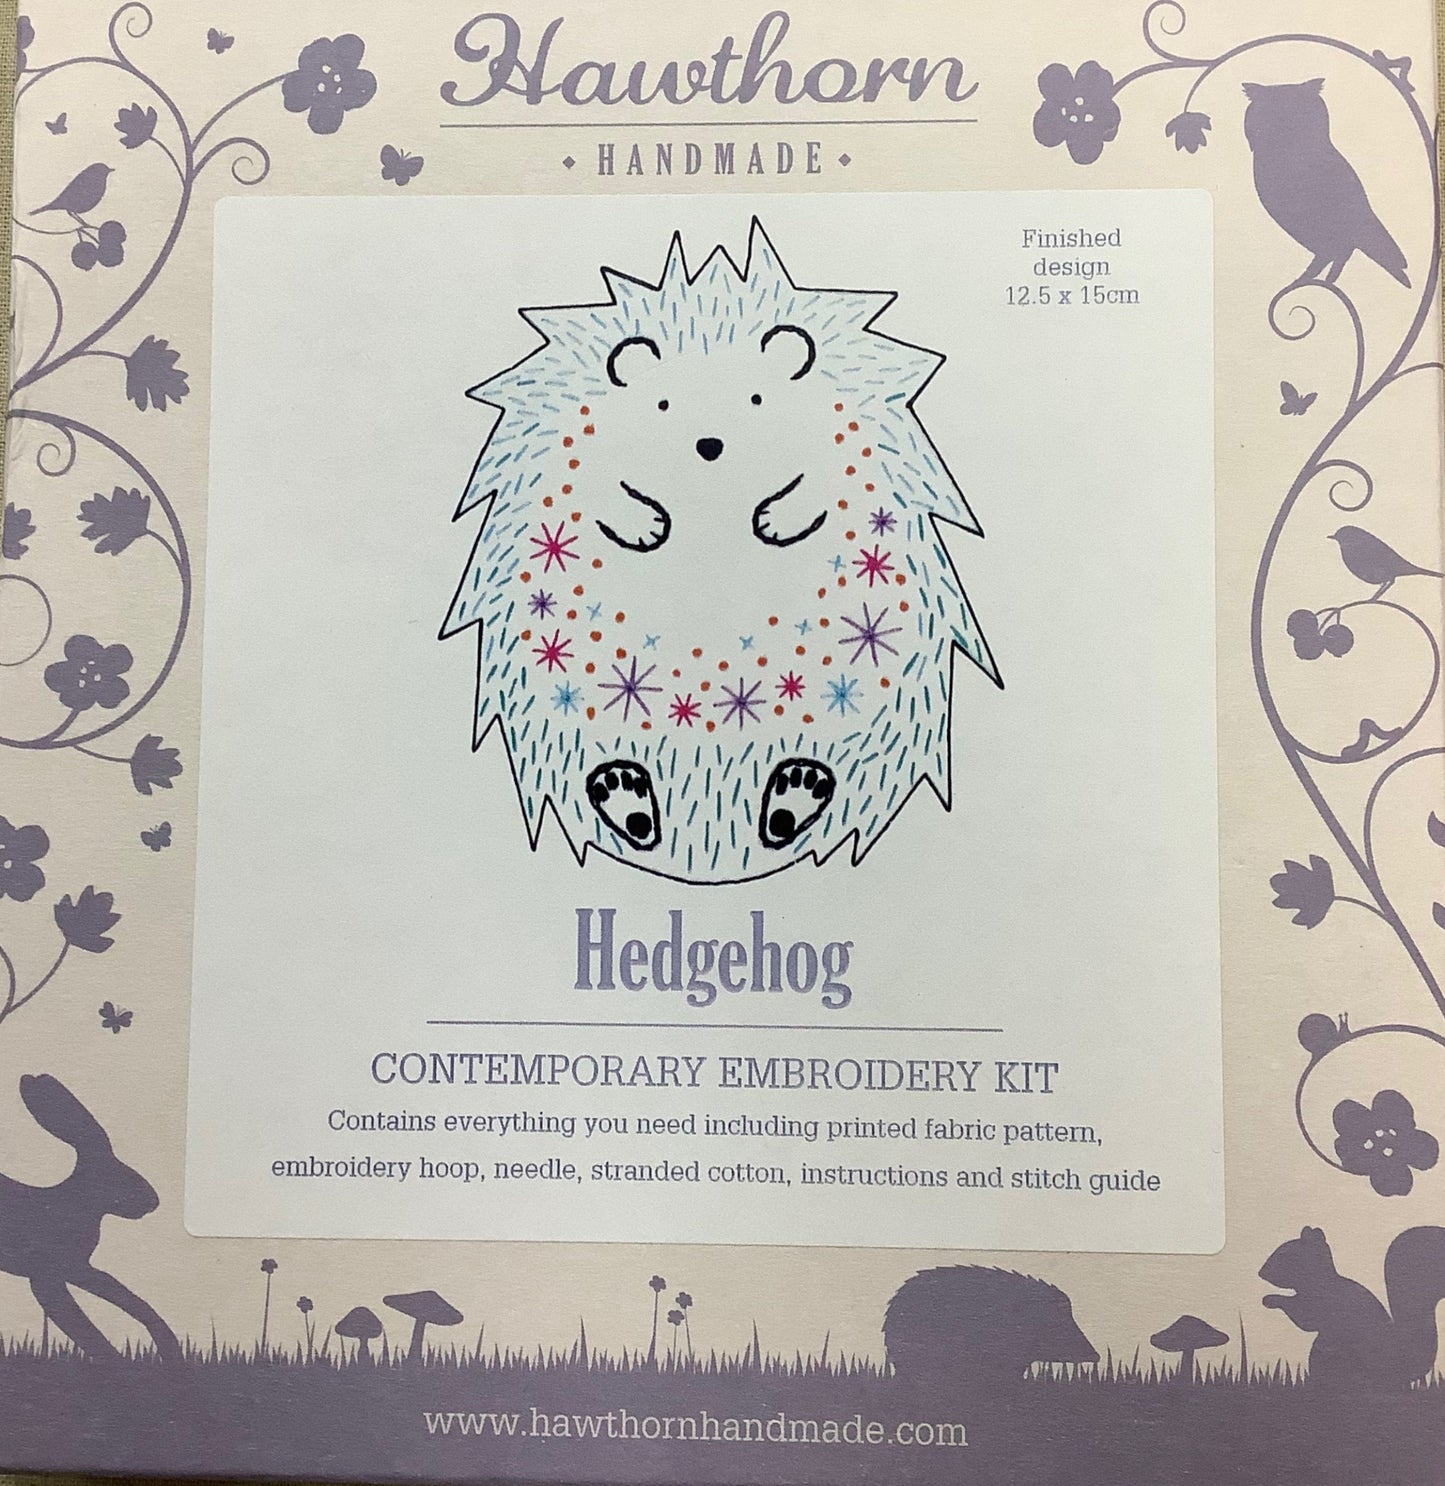 Hawthorn Handmade Ancient Hedgehog Embroidery Kit